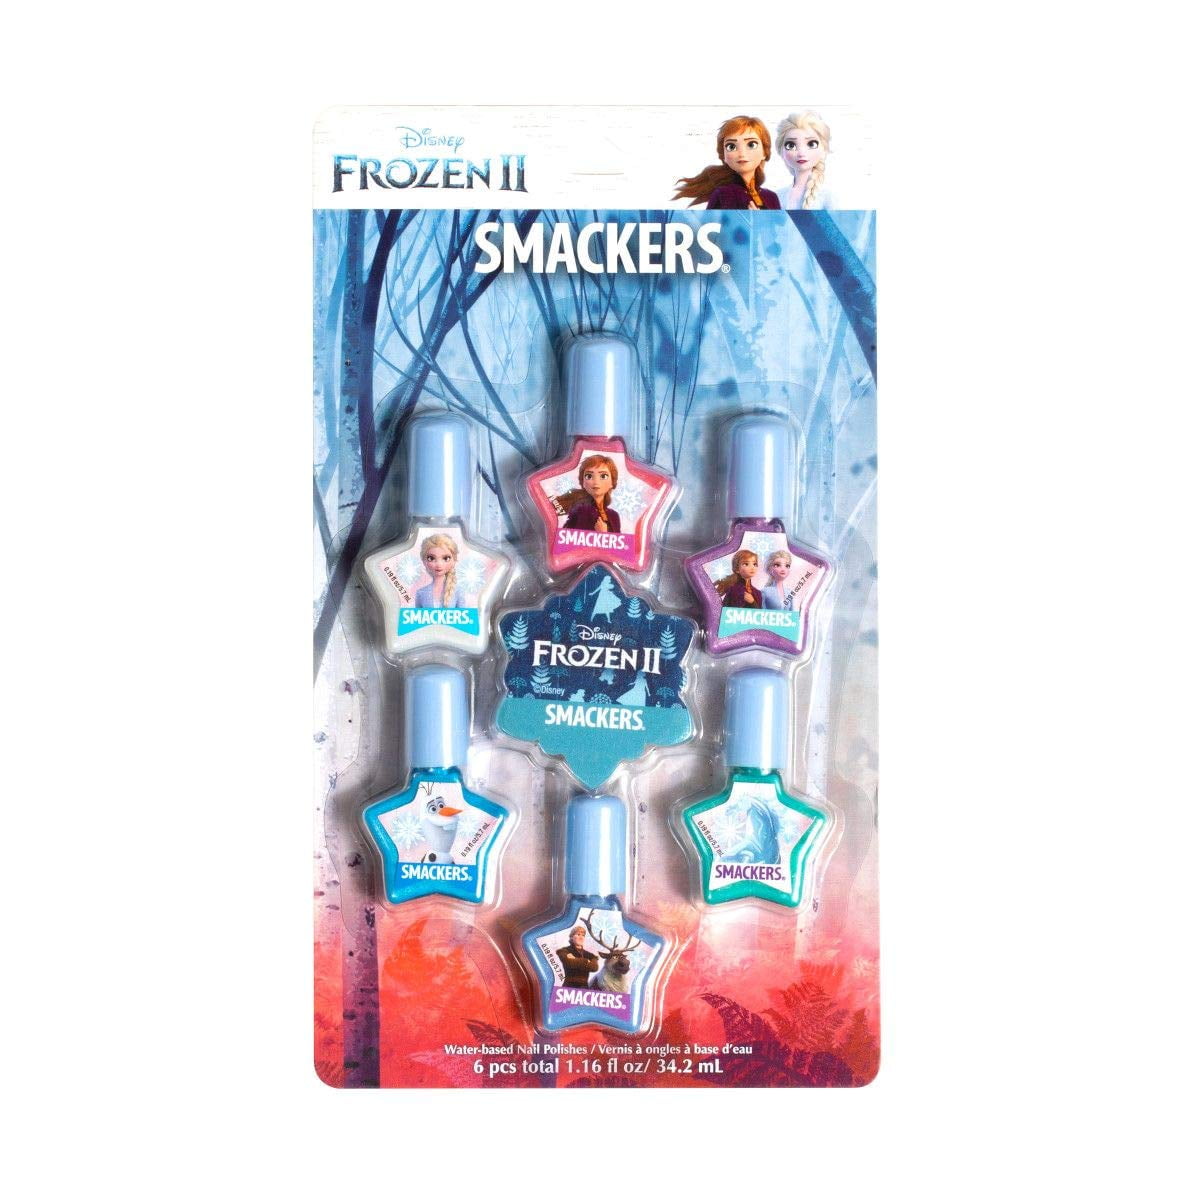 Disney Frozen 2 Smackers 6 Piece Nail Polish Gift Set 1.16 fl oz Water ...